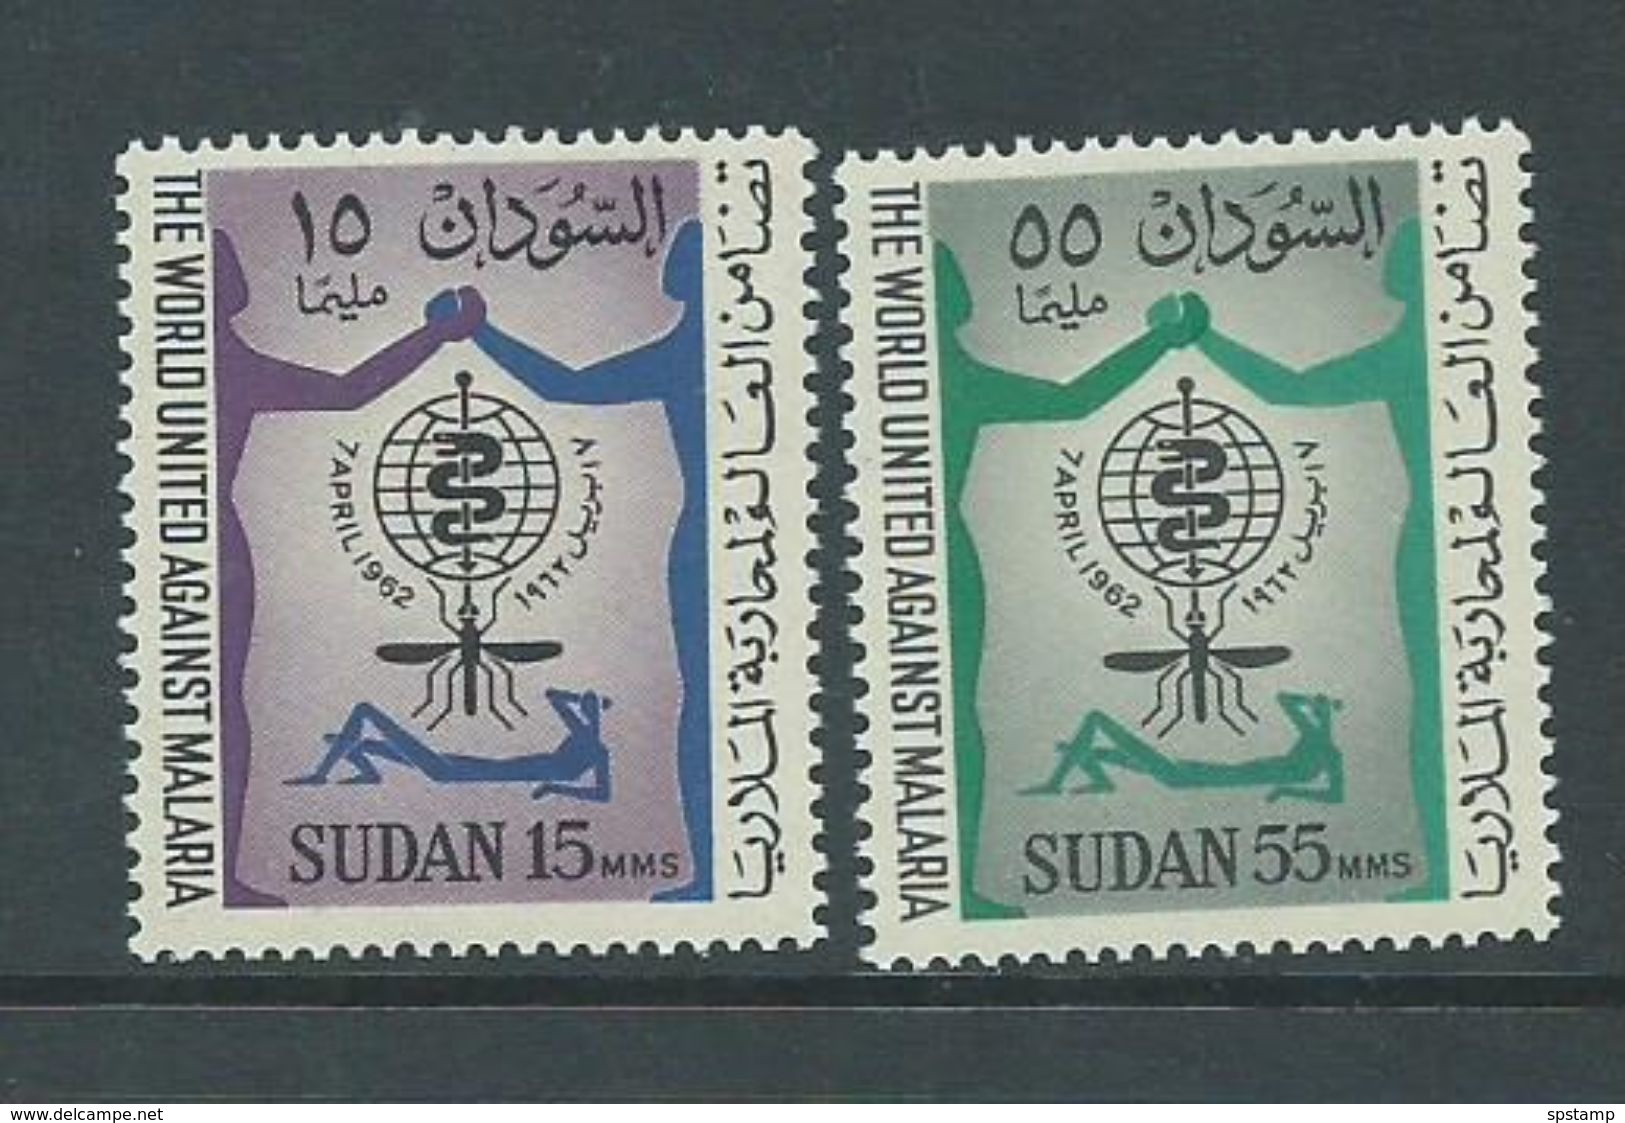 Sudan 1962 WHO Malaria Eradication Set 2 MNH - Sudan (1954-...)